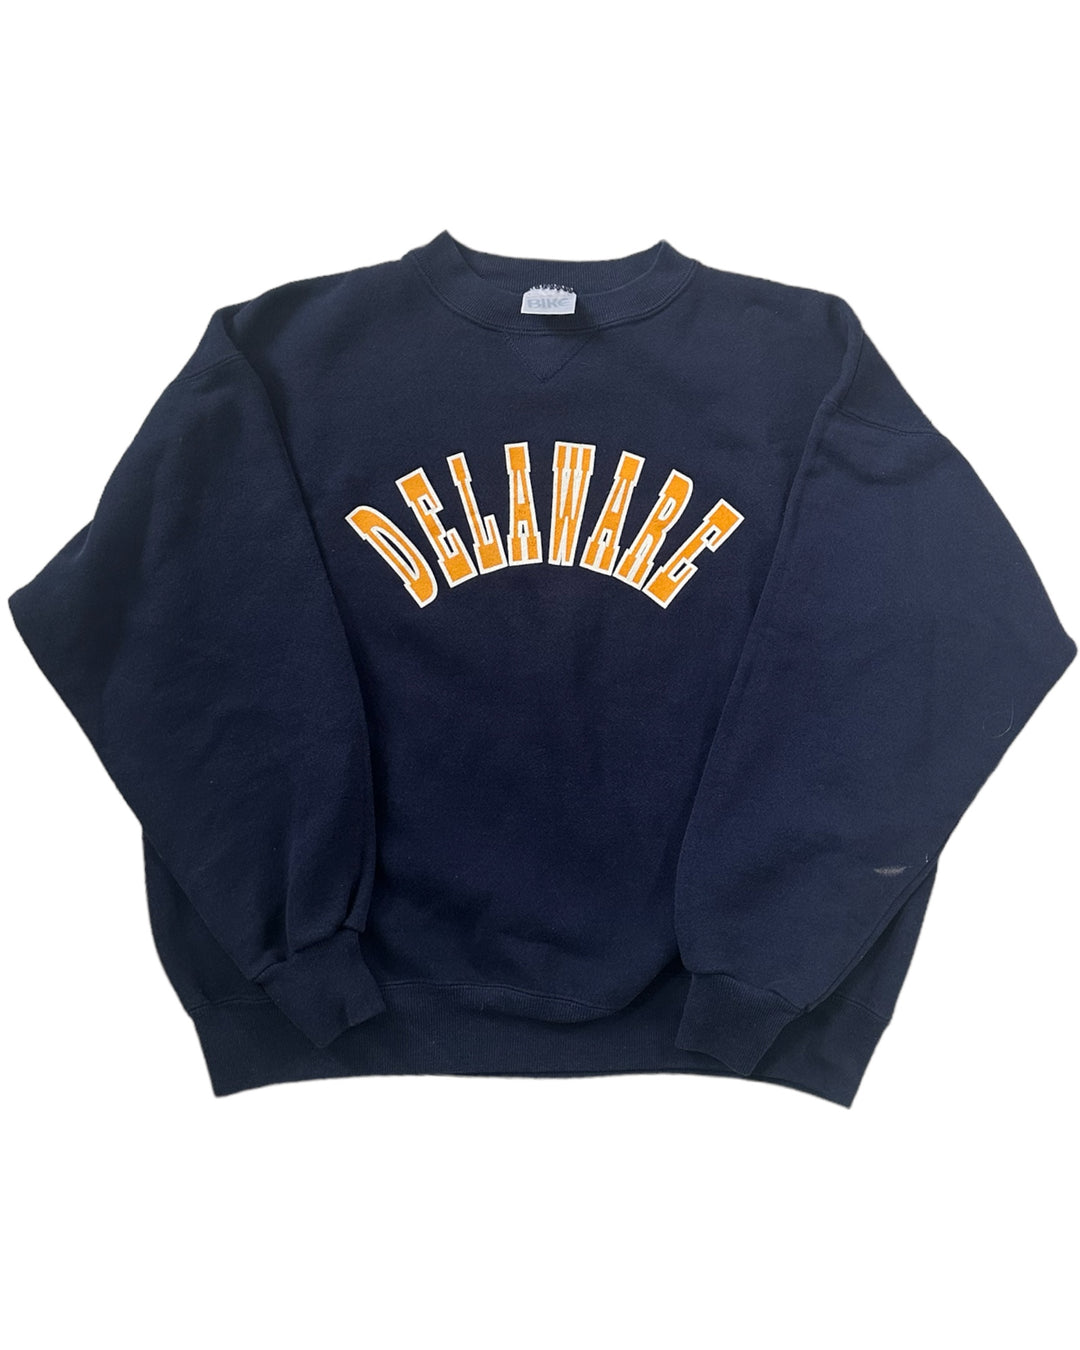 Delaware Vintage Sweatshirt